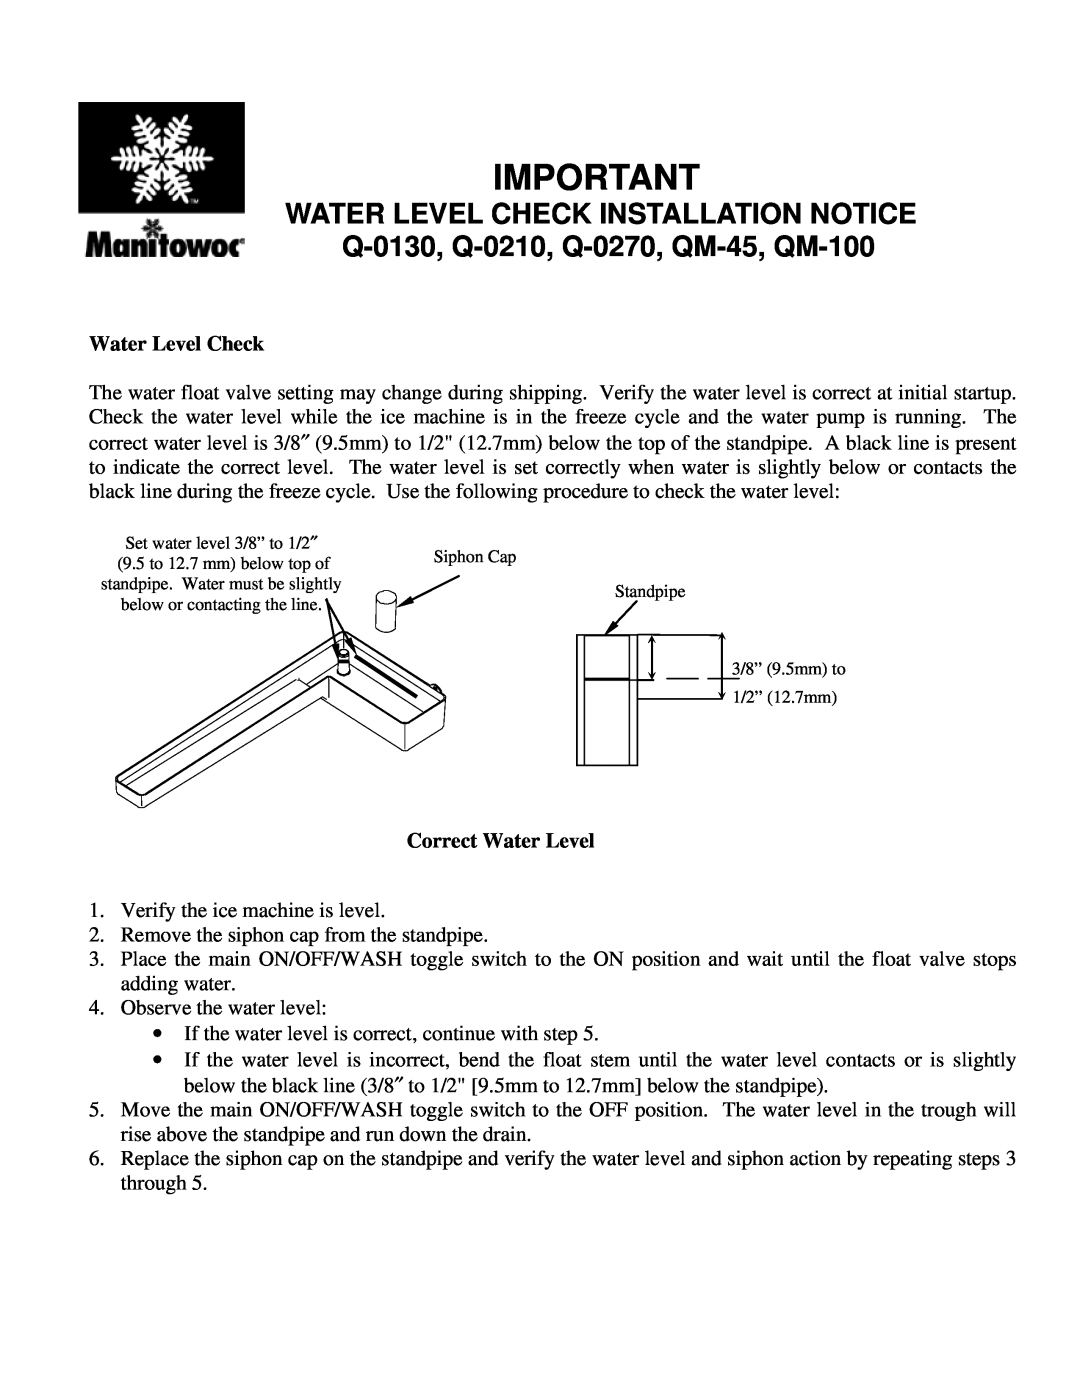 Manitowoc Ice manual Water Level Check Installation Notice, Q-0130, Q-0210, Q-0270, QM-45, QM-100, Correct Water Level 